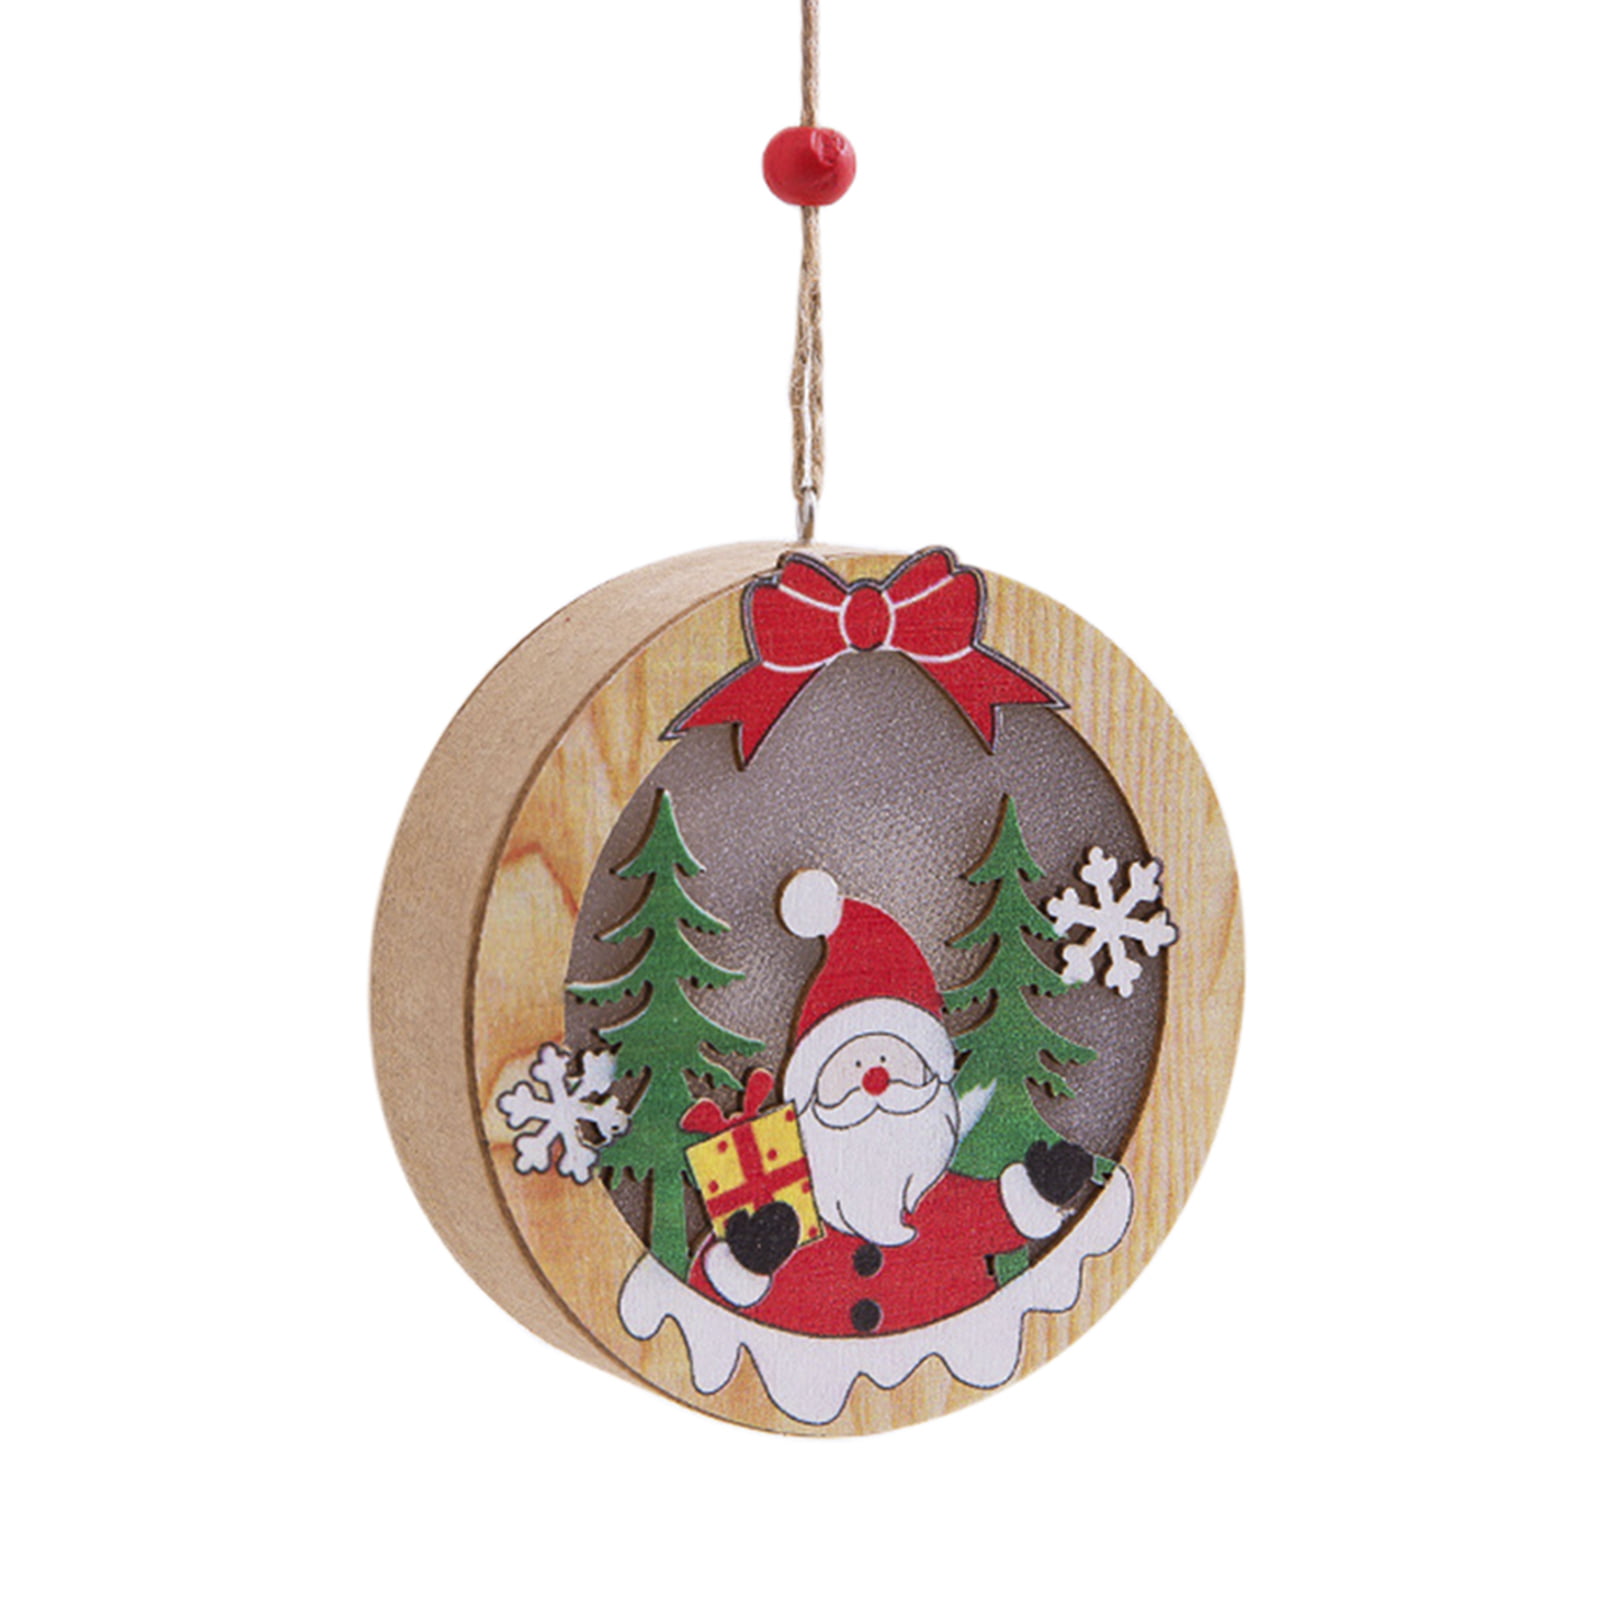 Details about   Christmas Tree Hanging Pendant Santa Claus Design Home Party Decor Ornament 